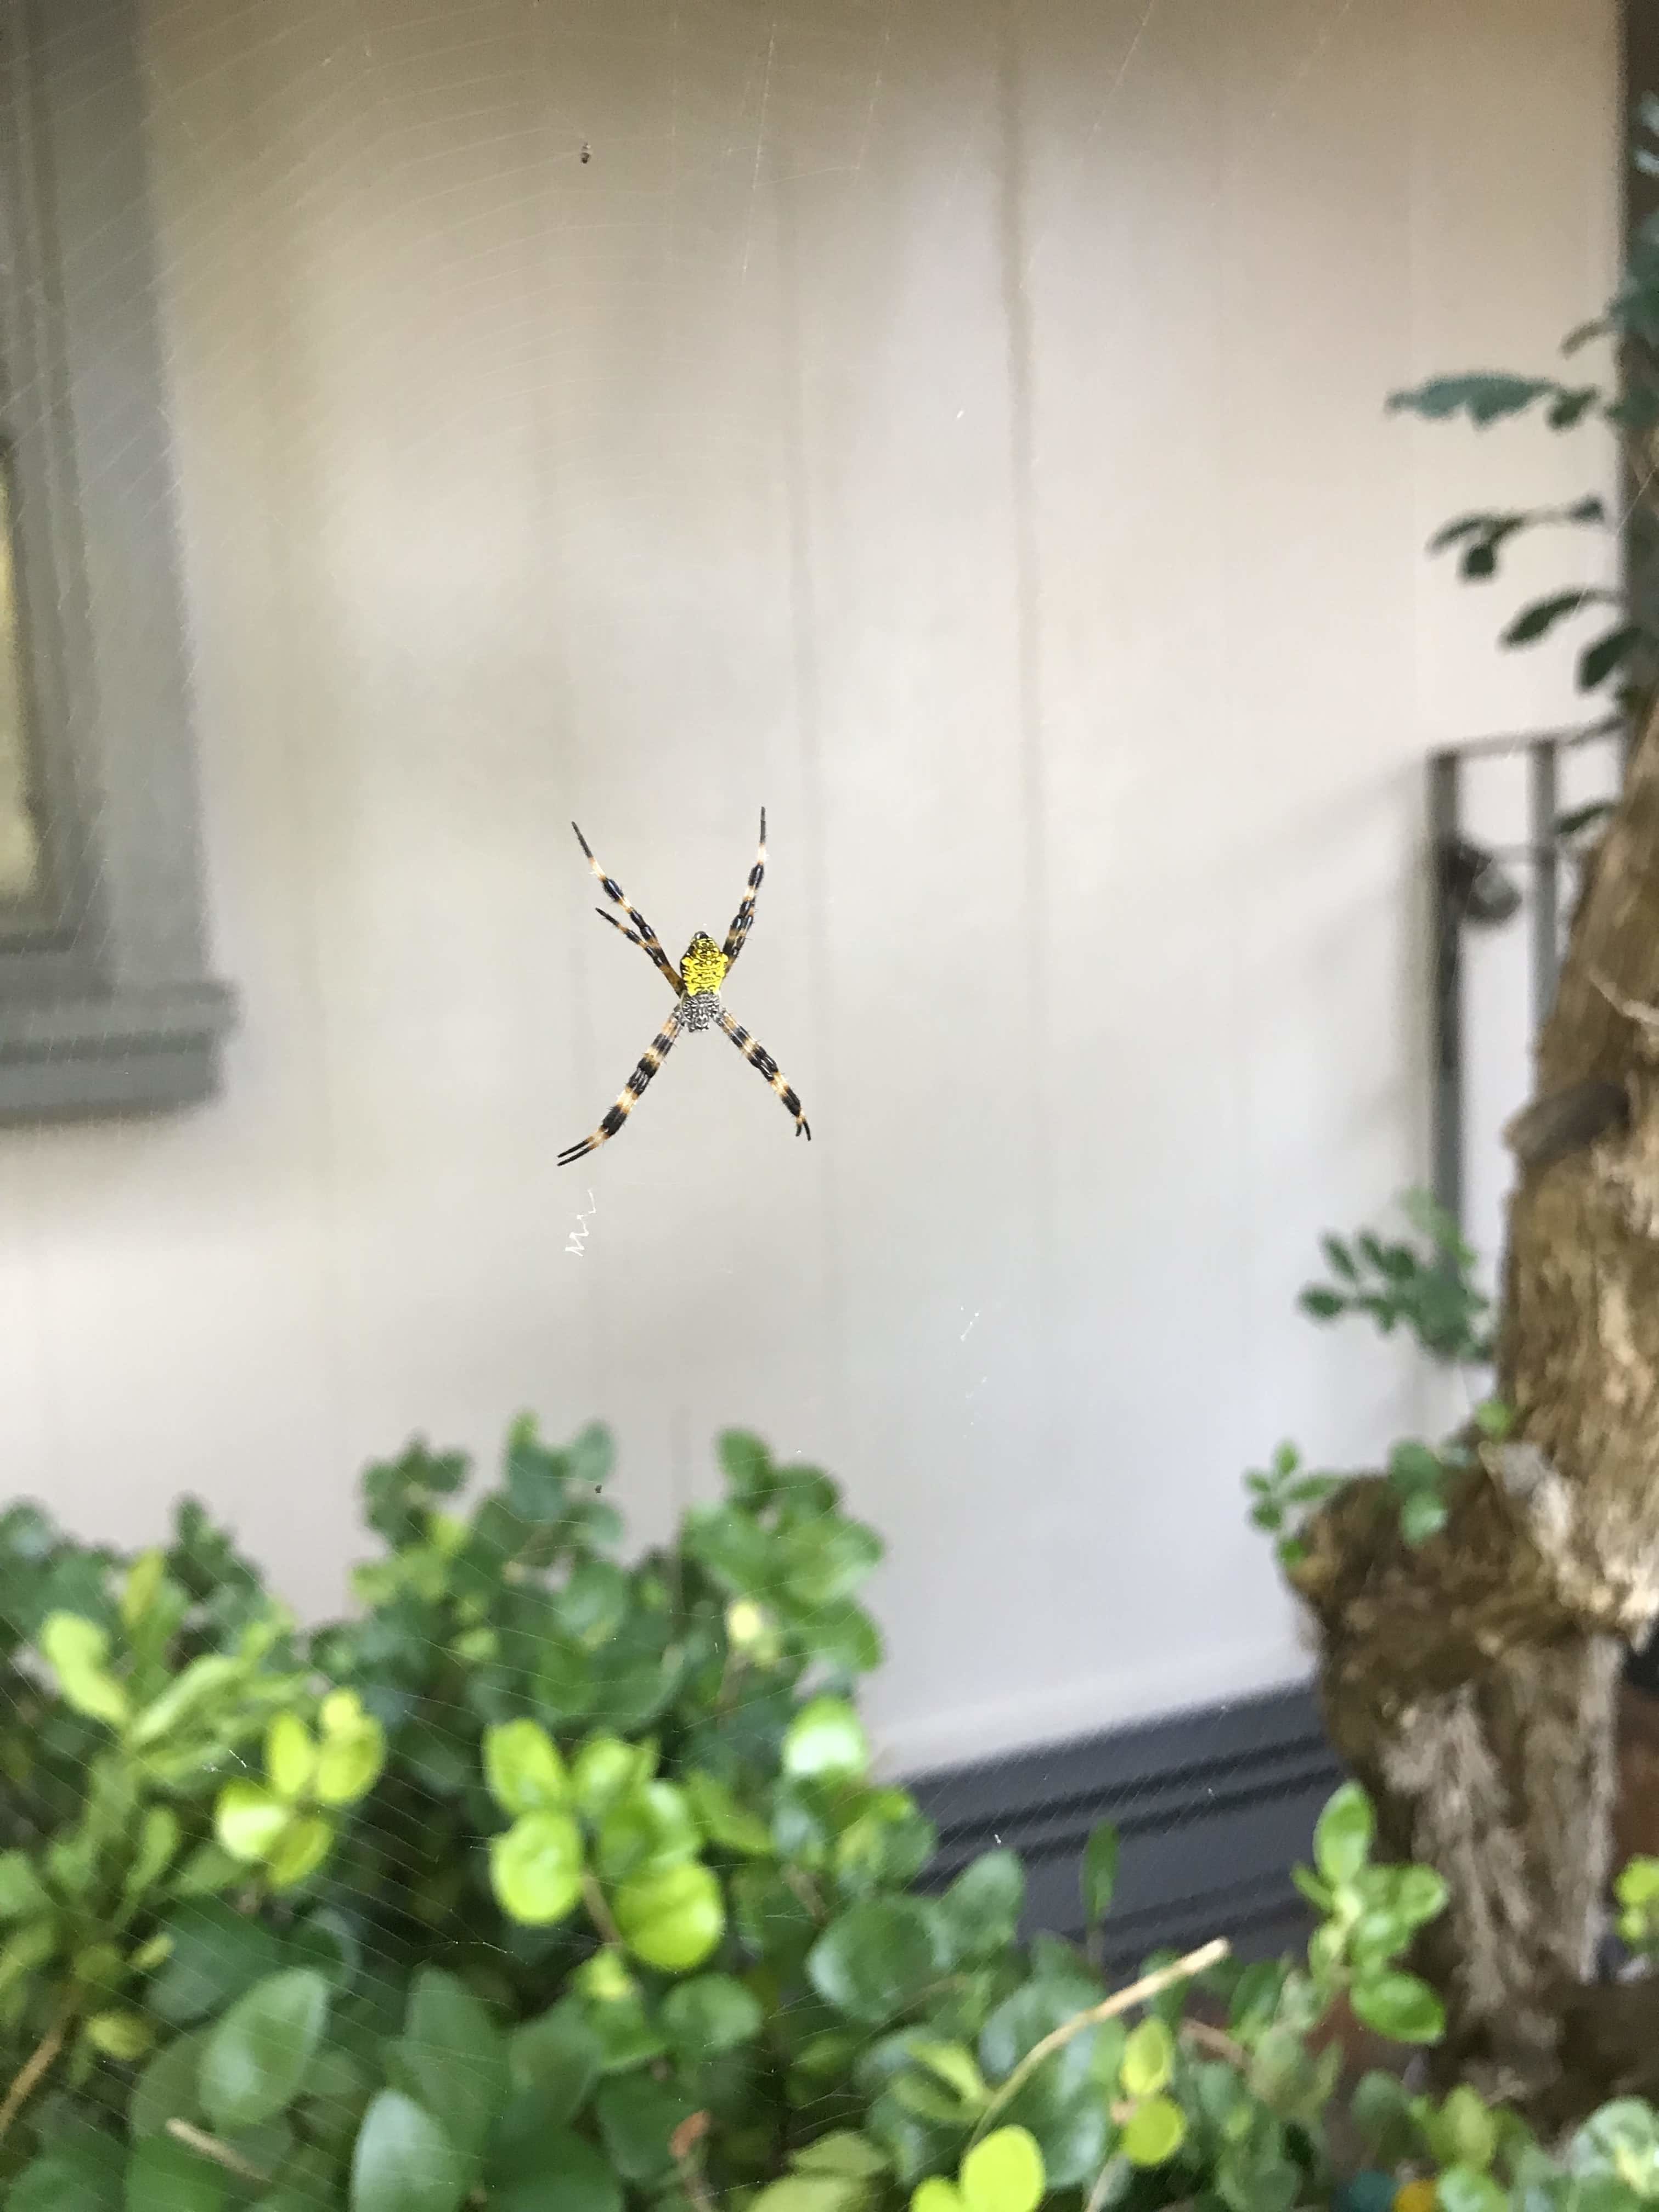 Picture of Argiope appensa (Hawaiian Garden Spider) - Dorsal